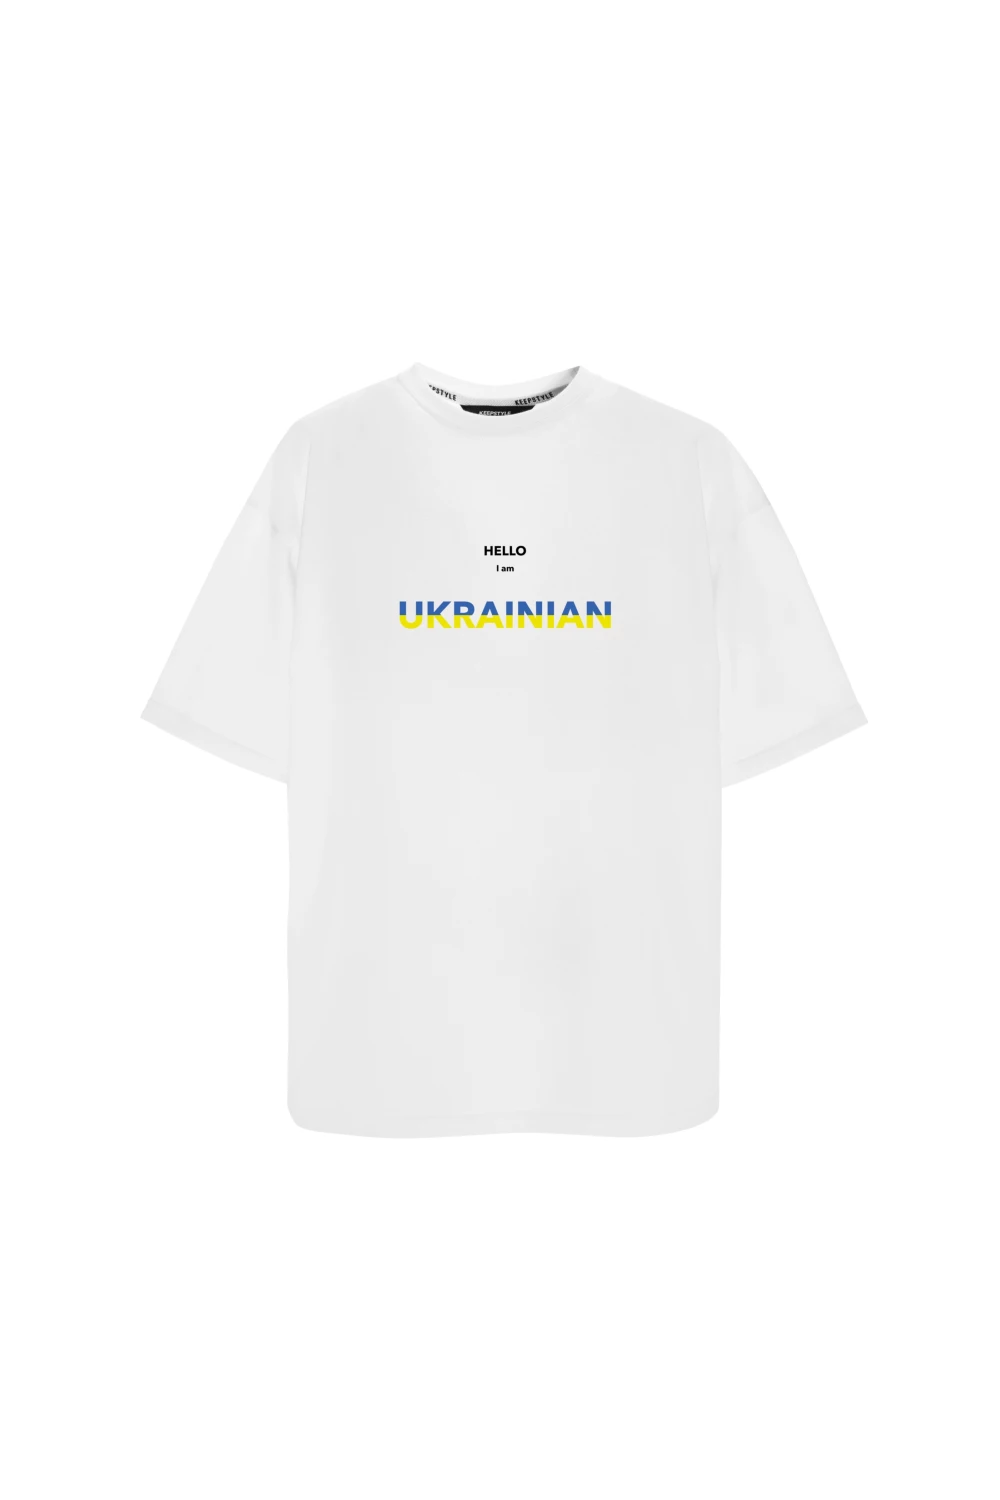 ukrainian t-shirt in white color